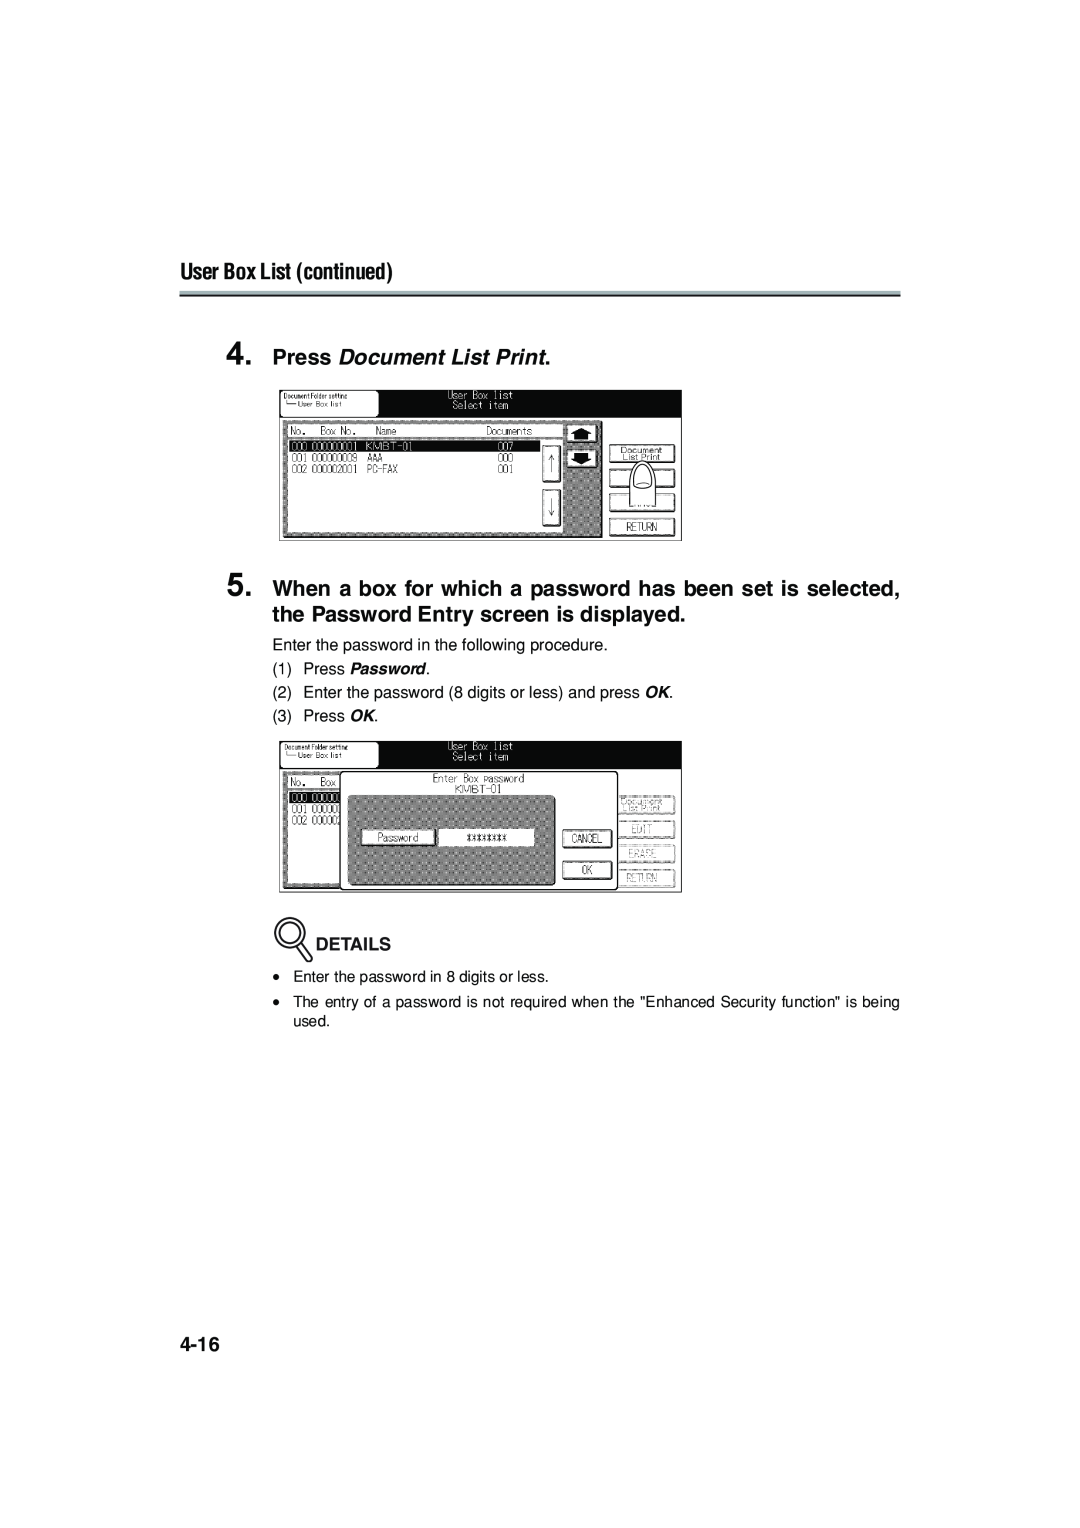 Konica Minolta 7222 manual User Box List continued, Press Document List Print, Details, Press Password 